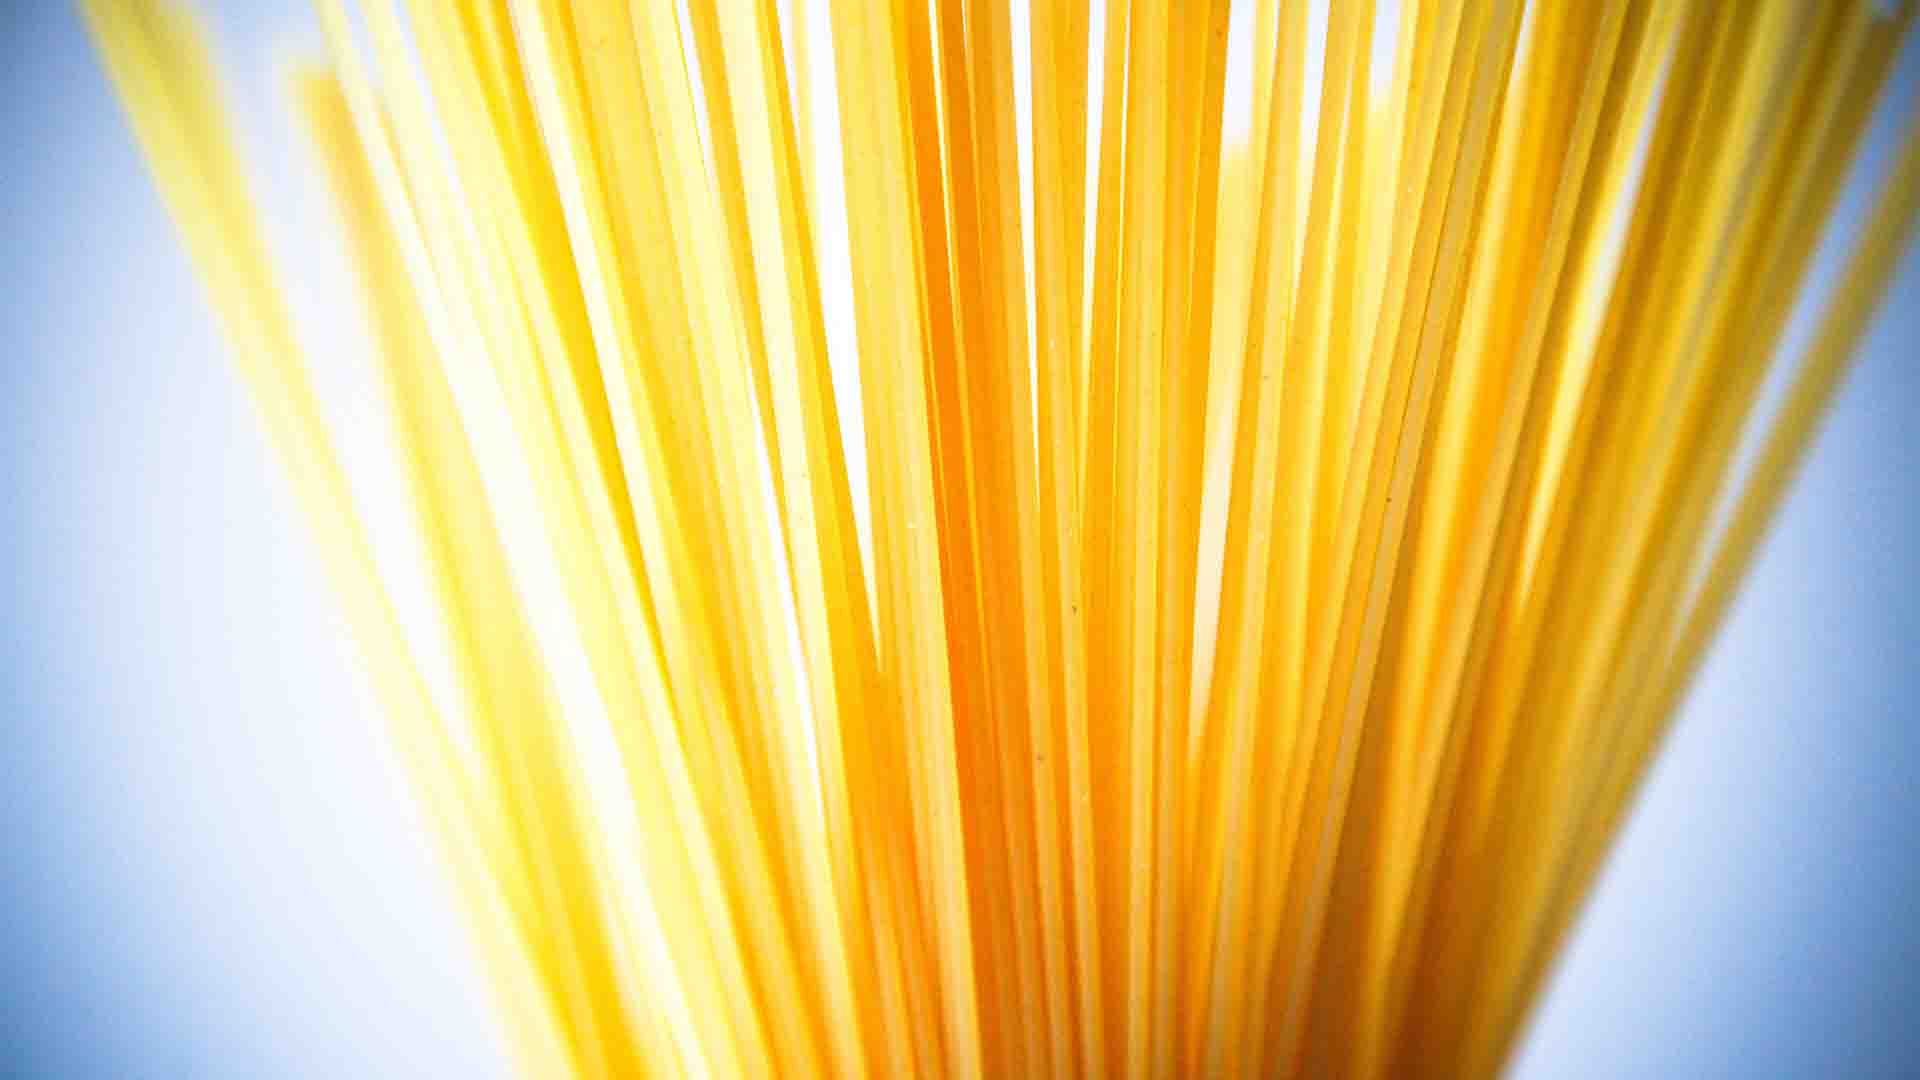 Spaghetti noodles